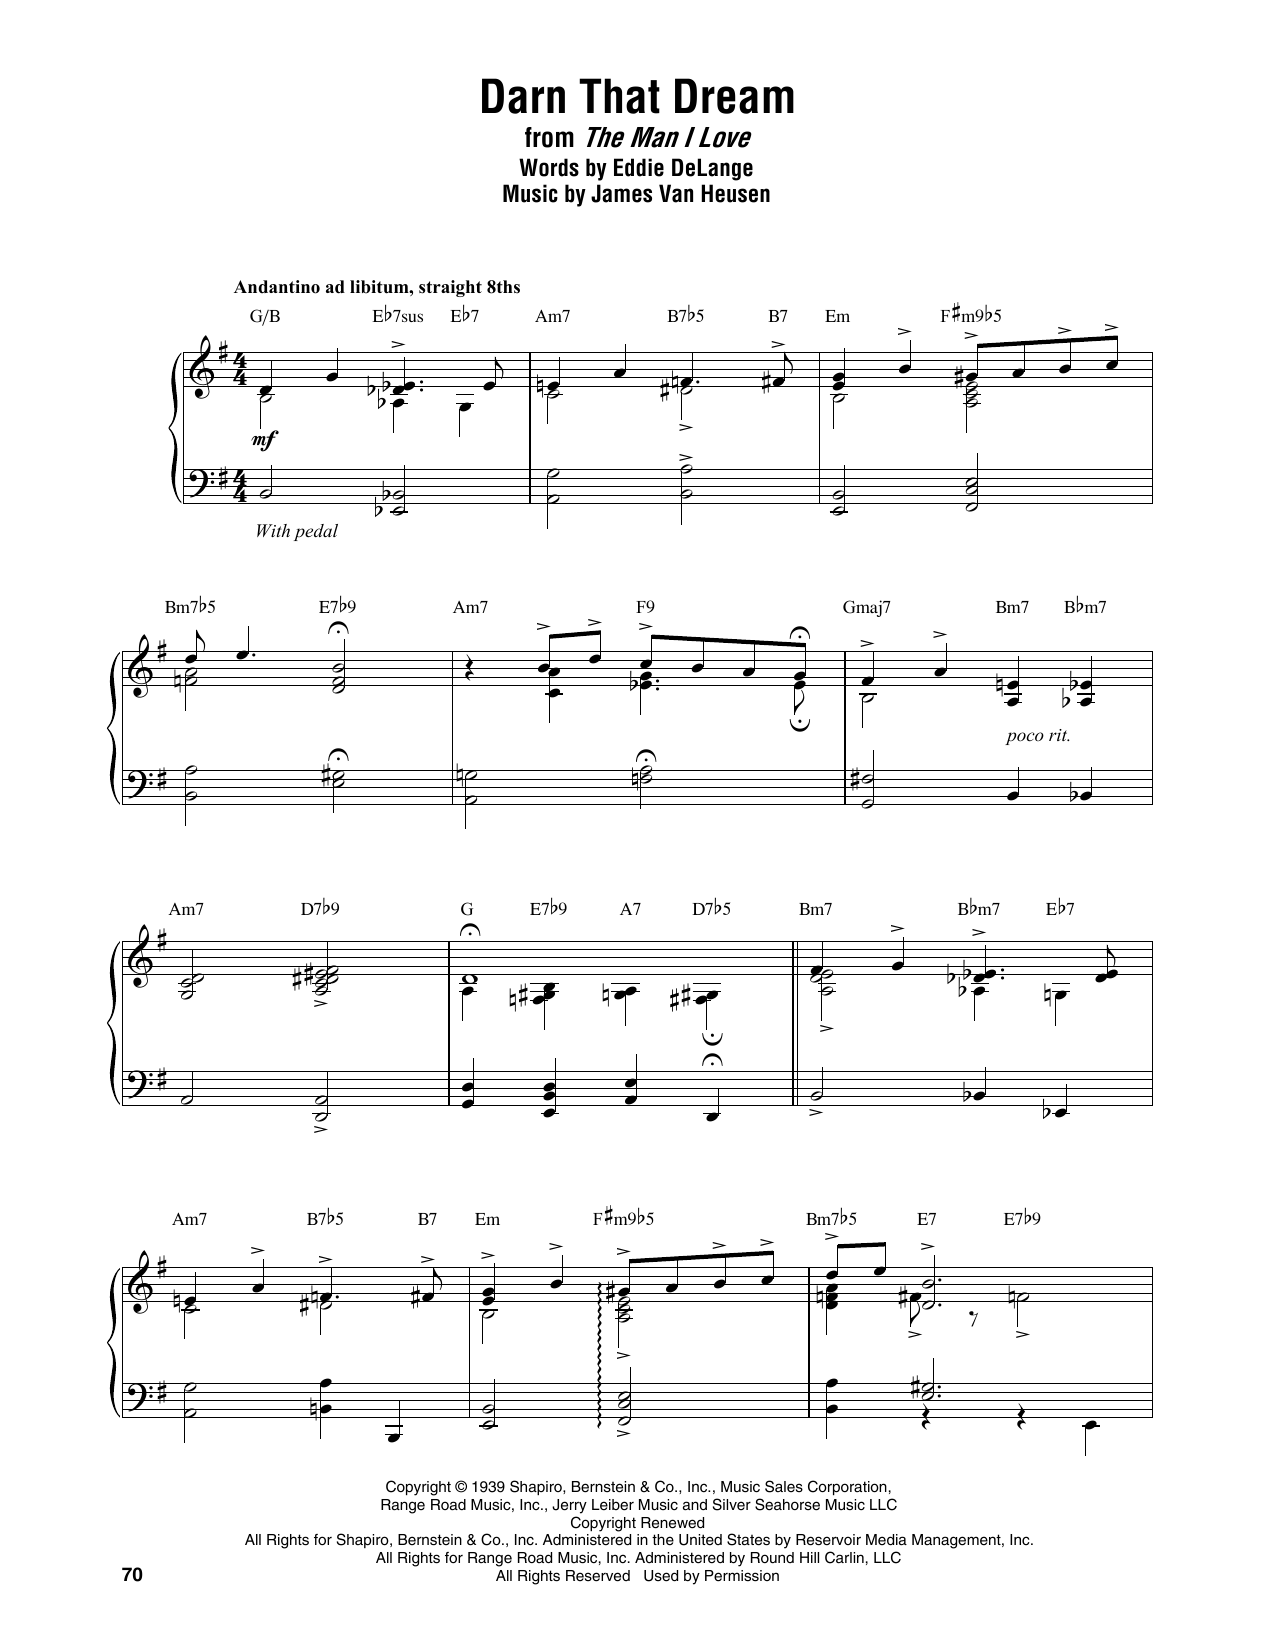 Thelonious Monk Darn That Dream sheet music notes printable PDF score